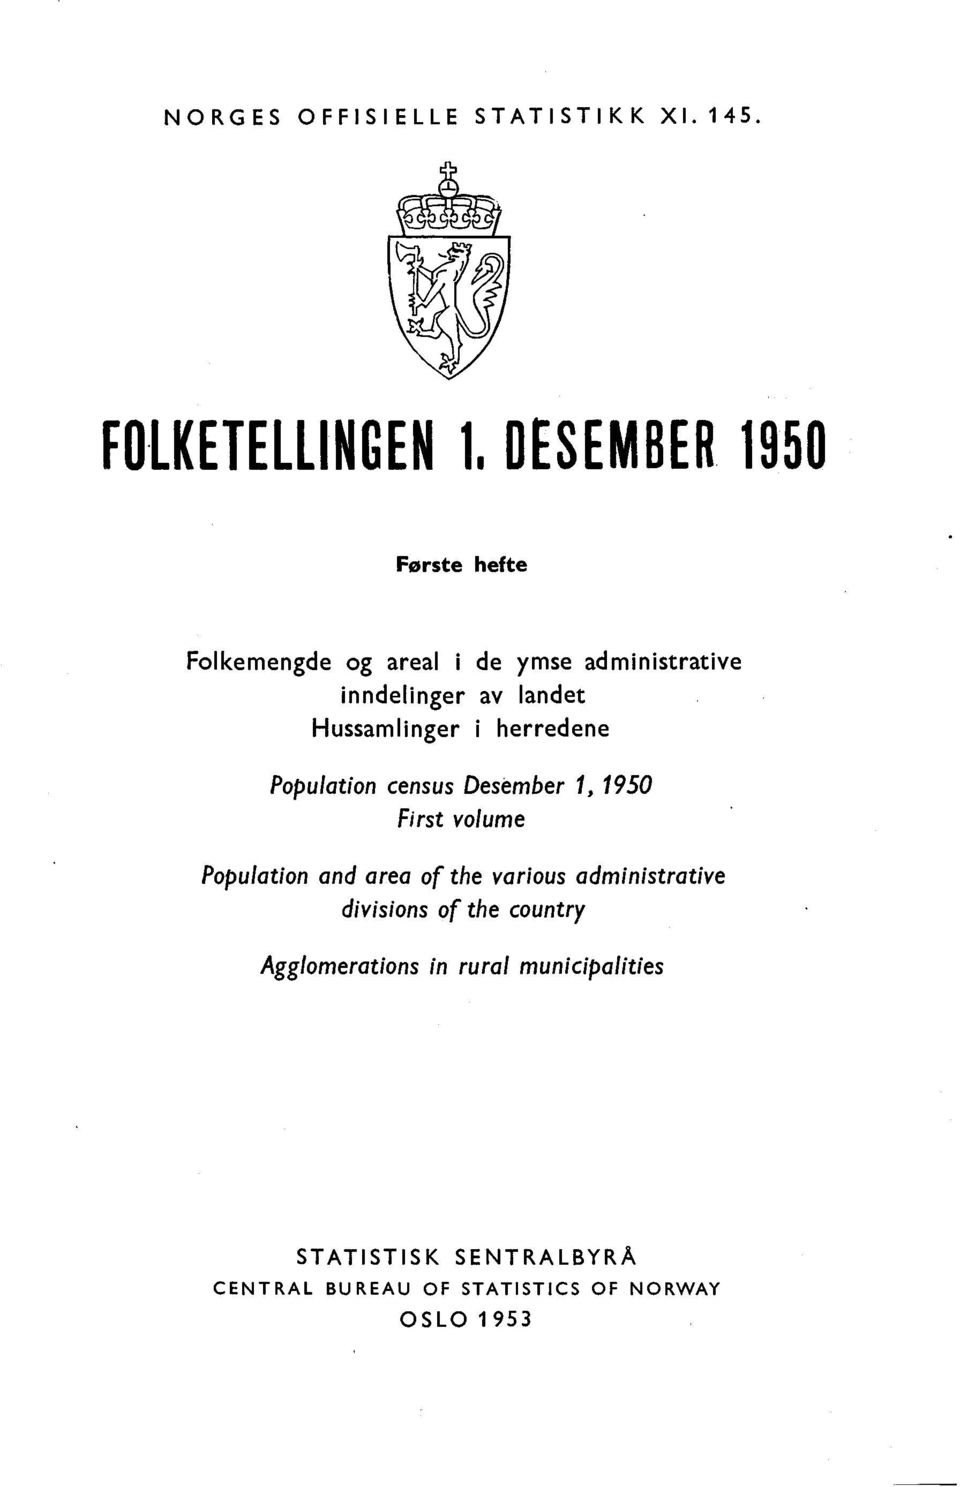 Hussamlinger i herredene Population census Desember, 950 First volume Population and area of the various